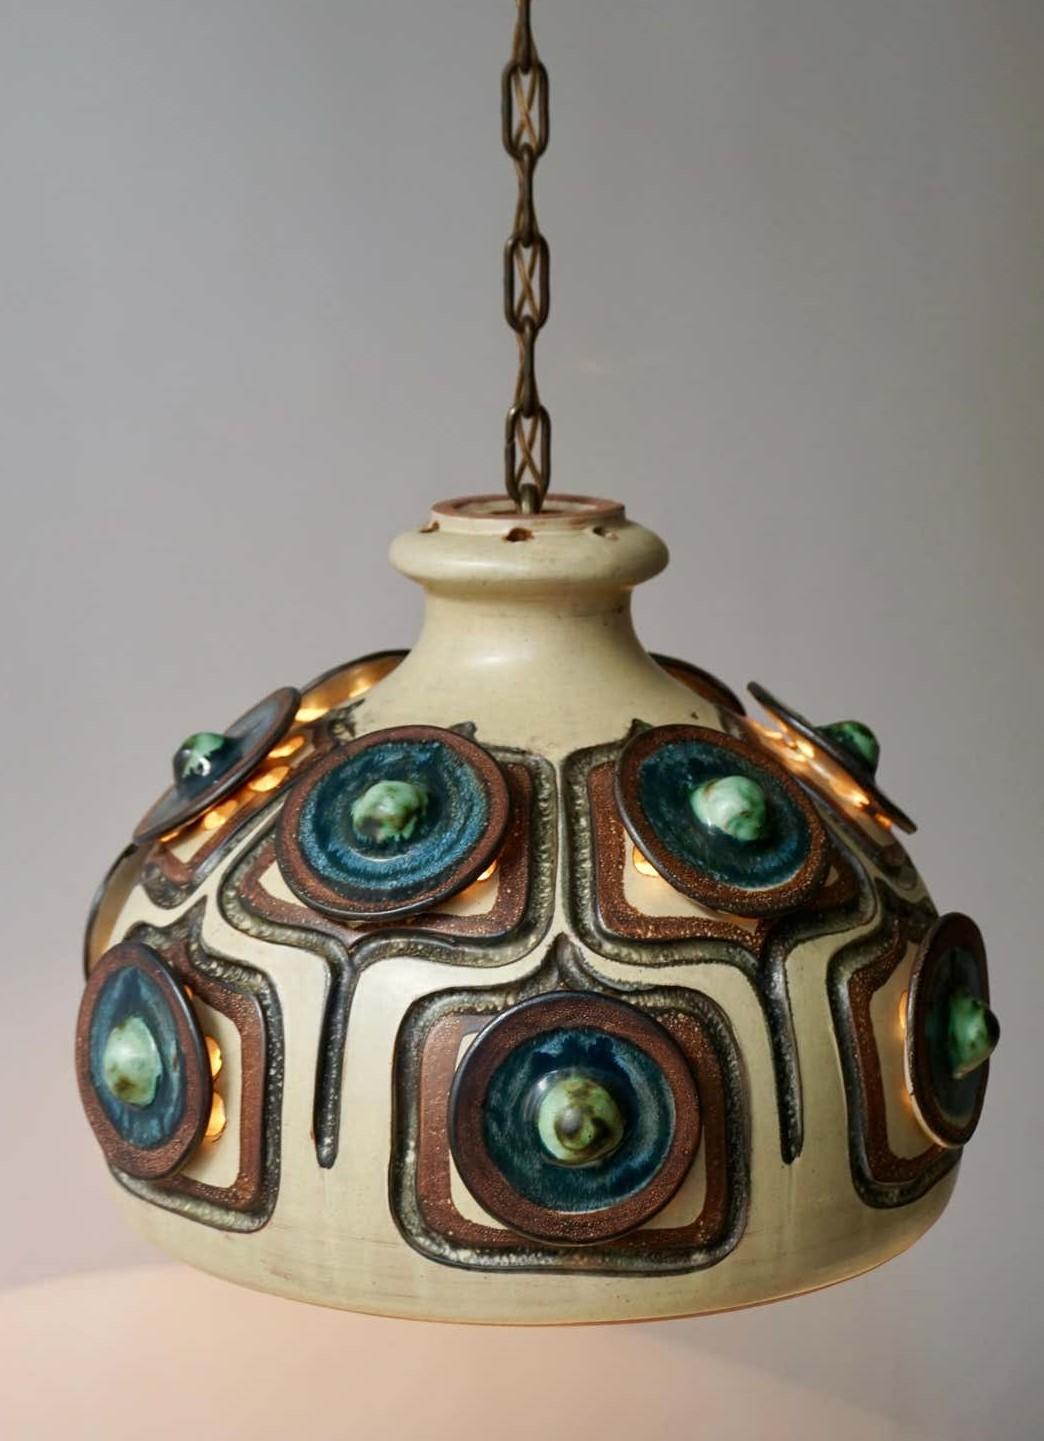 Scandinavian Modern Danish Ceramic Pendant Lamp, Chandelier by Jette Helleroe for Axella circa 1970s